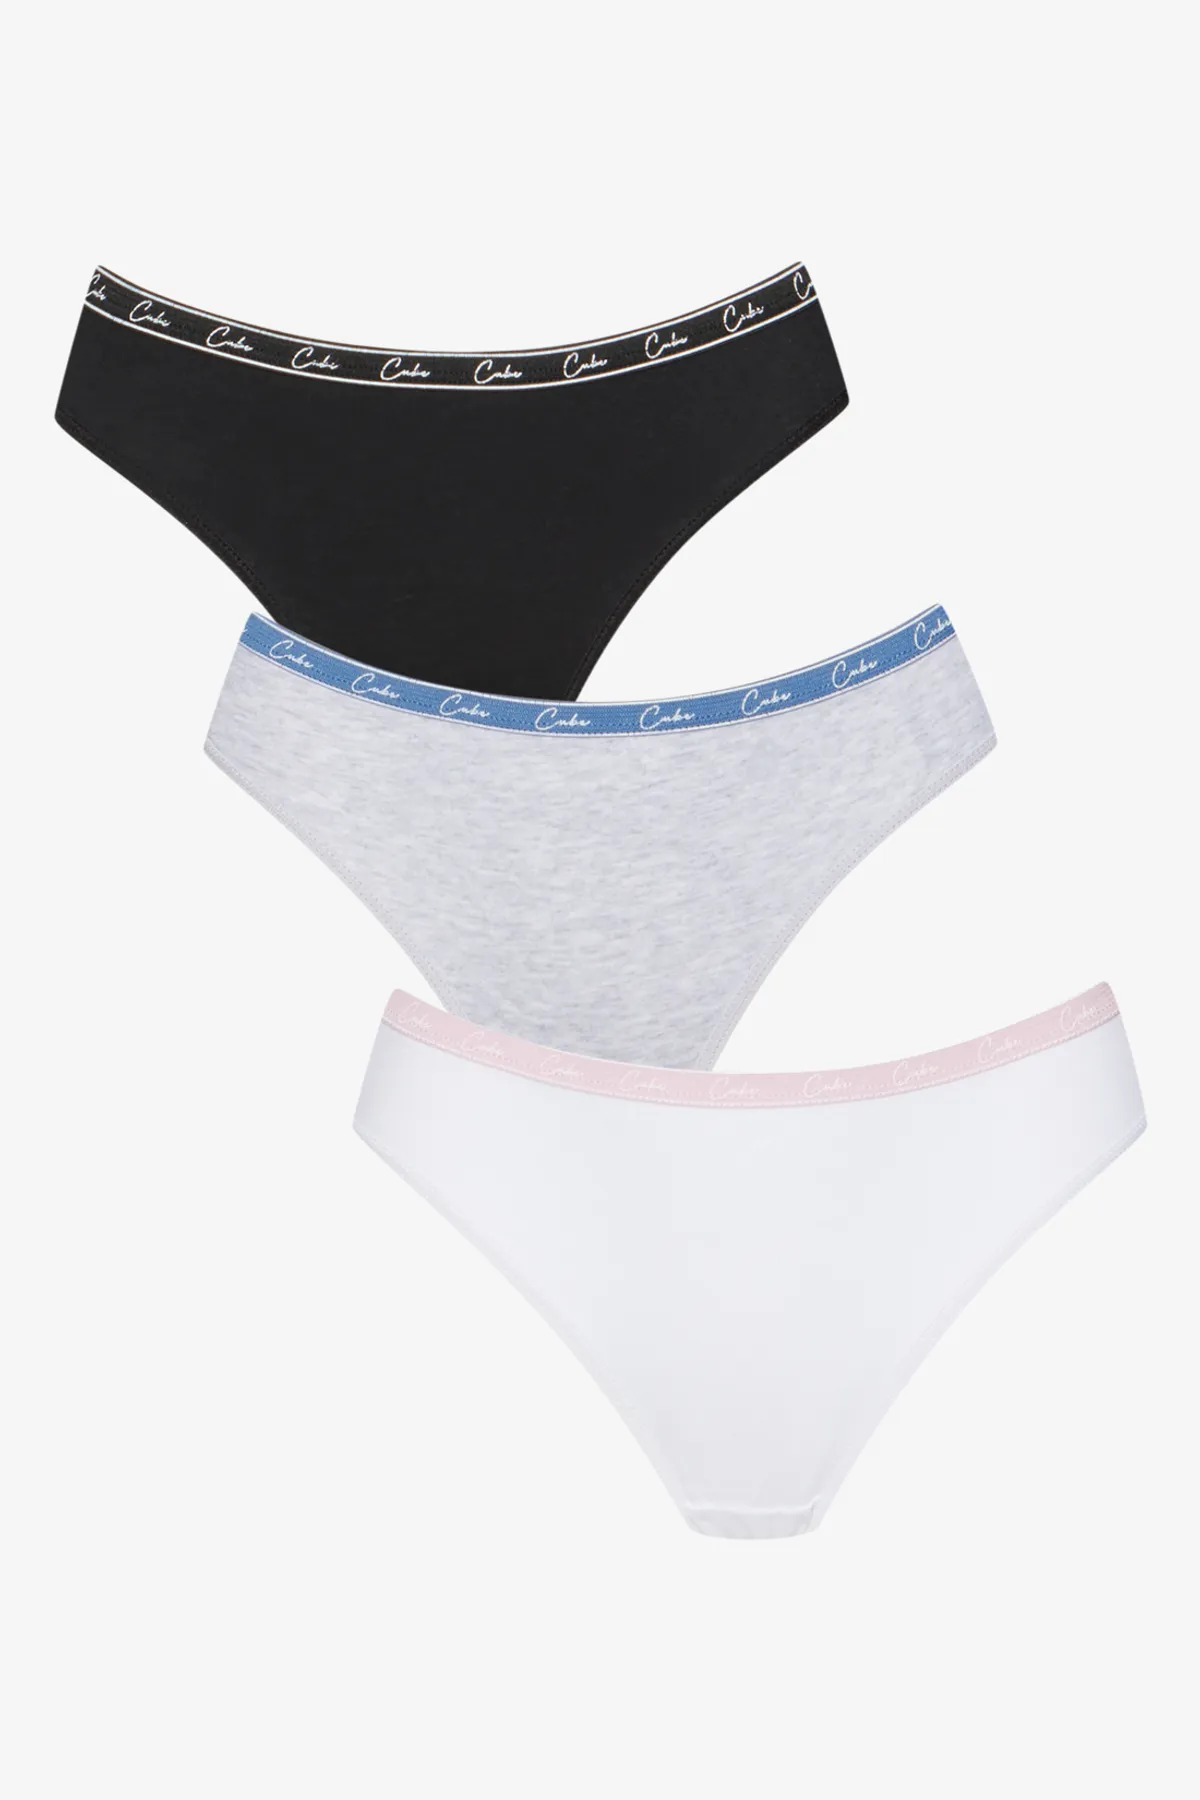 3 Pack bikini panties white, grey & black - TEEN GIRLS Underwear